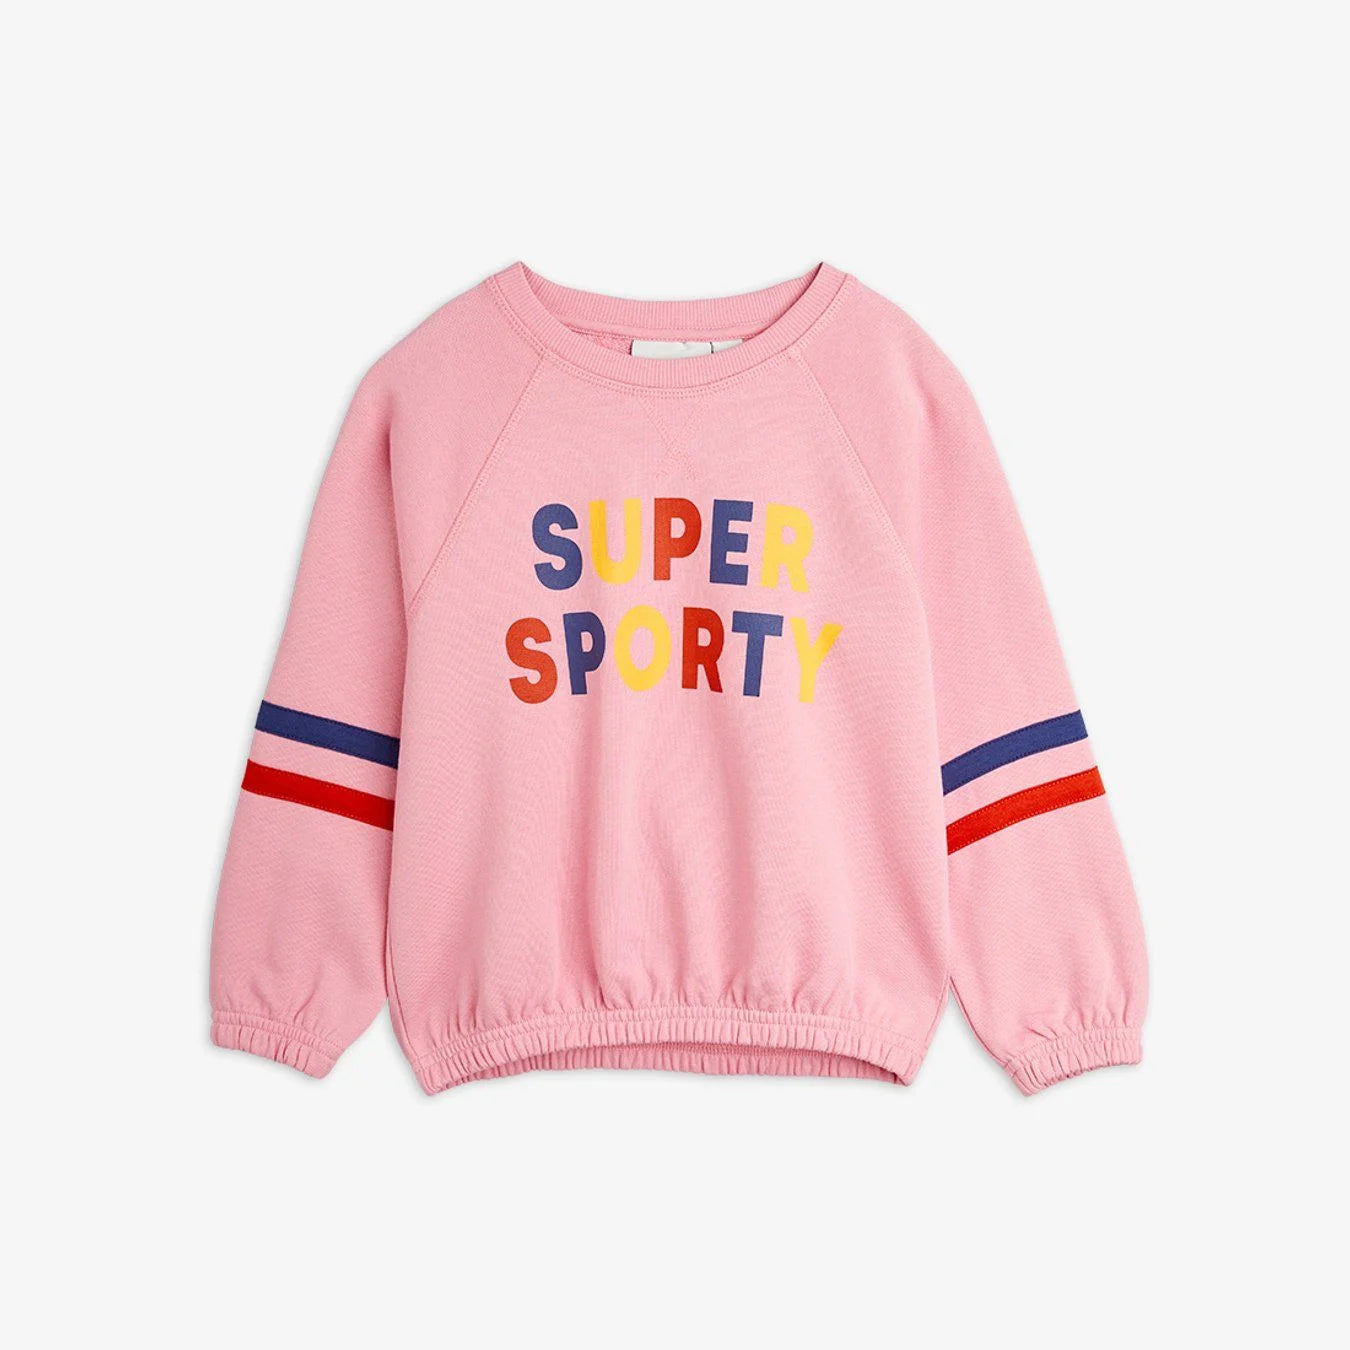 Mini Rodini - Sweatshirt Super Sporty